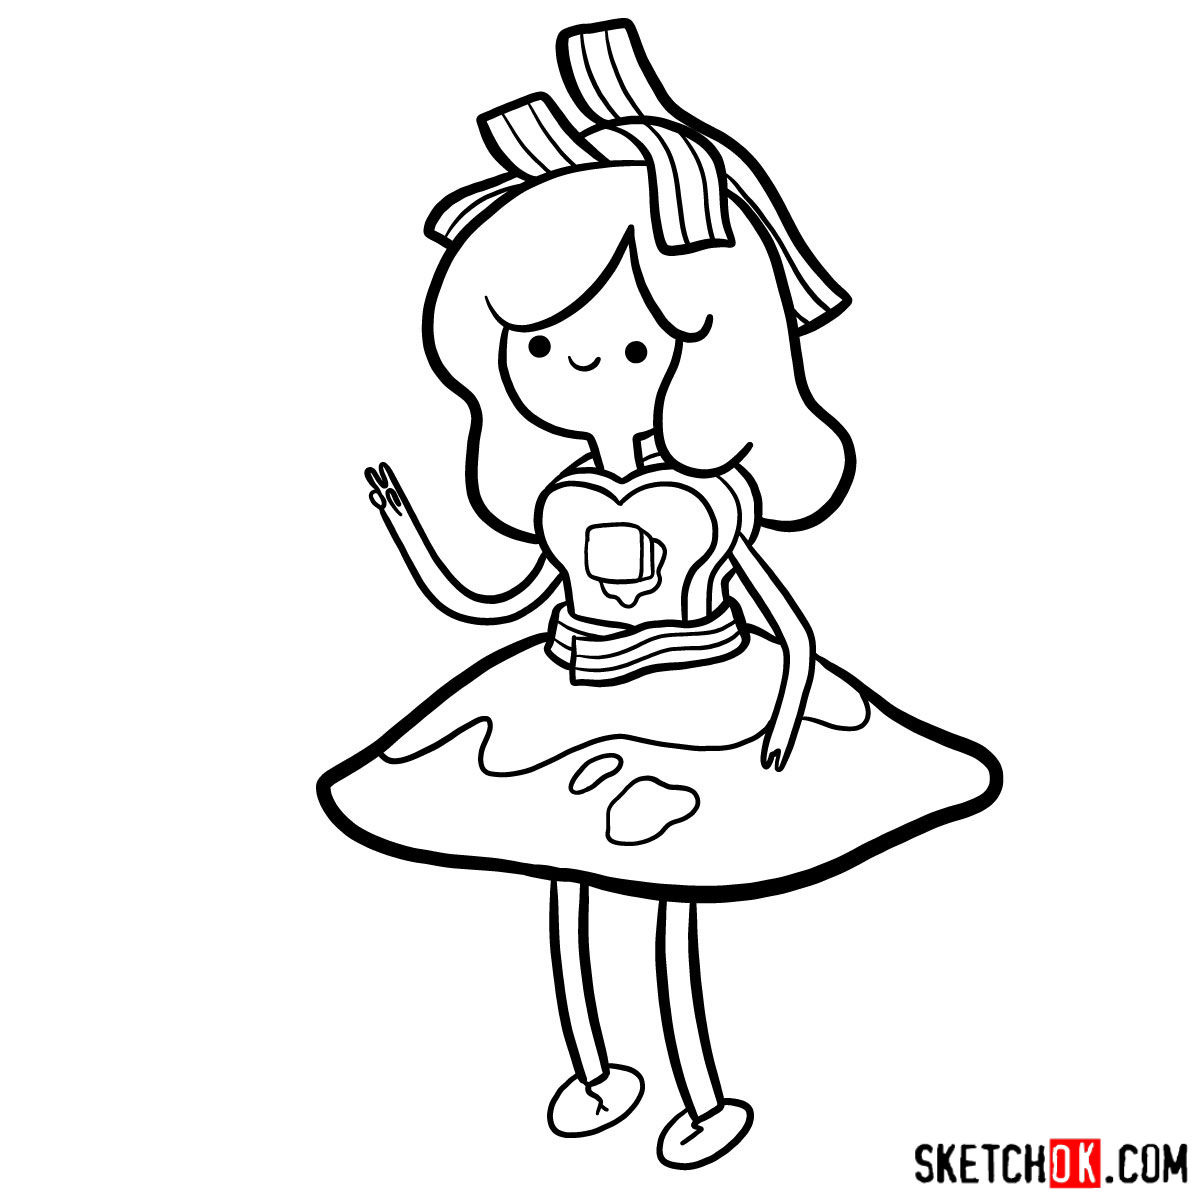 Breakfast Princess coloring page – Free Printable PDF